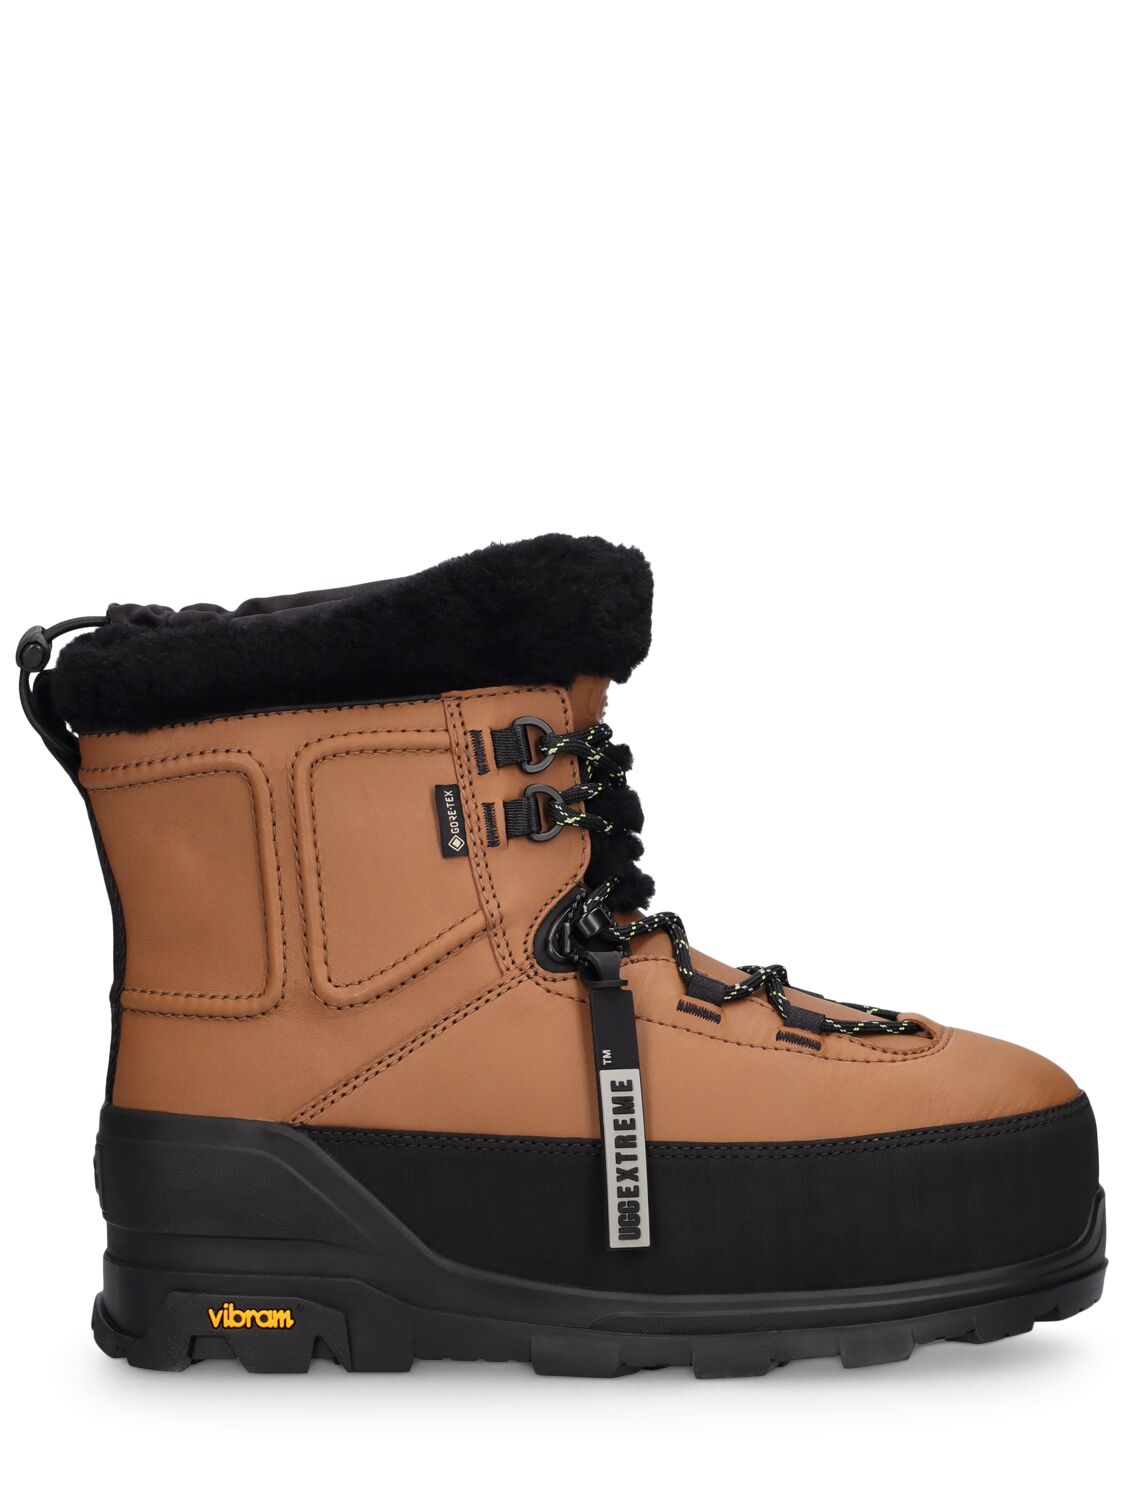 Image of Shasta Leather Hiking Boots